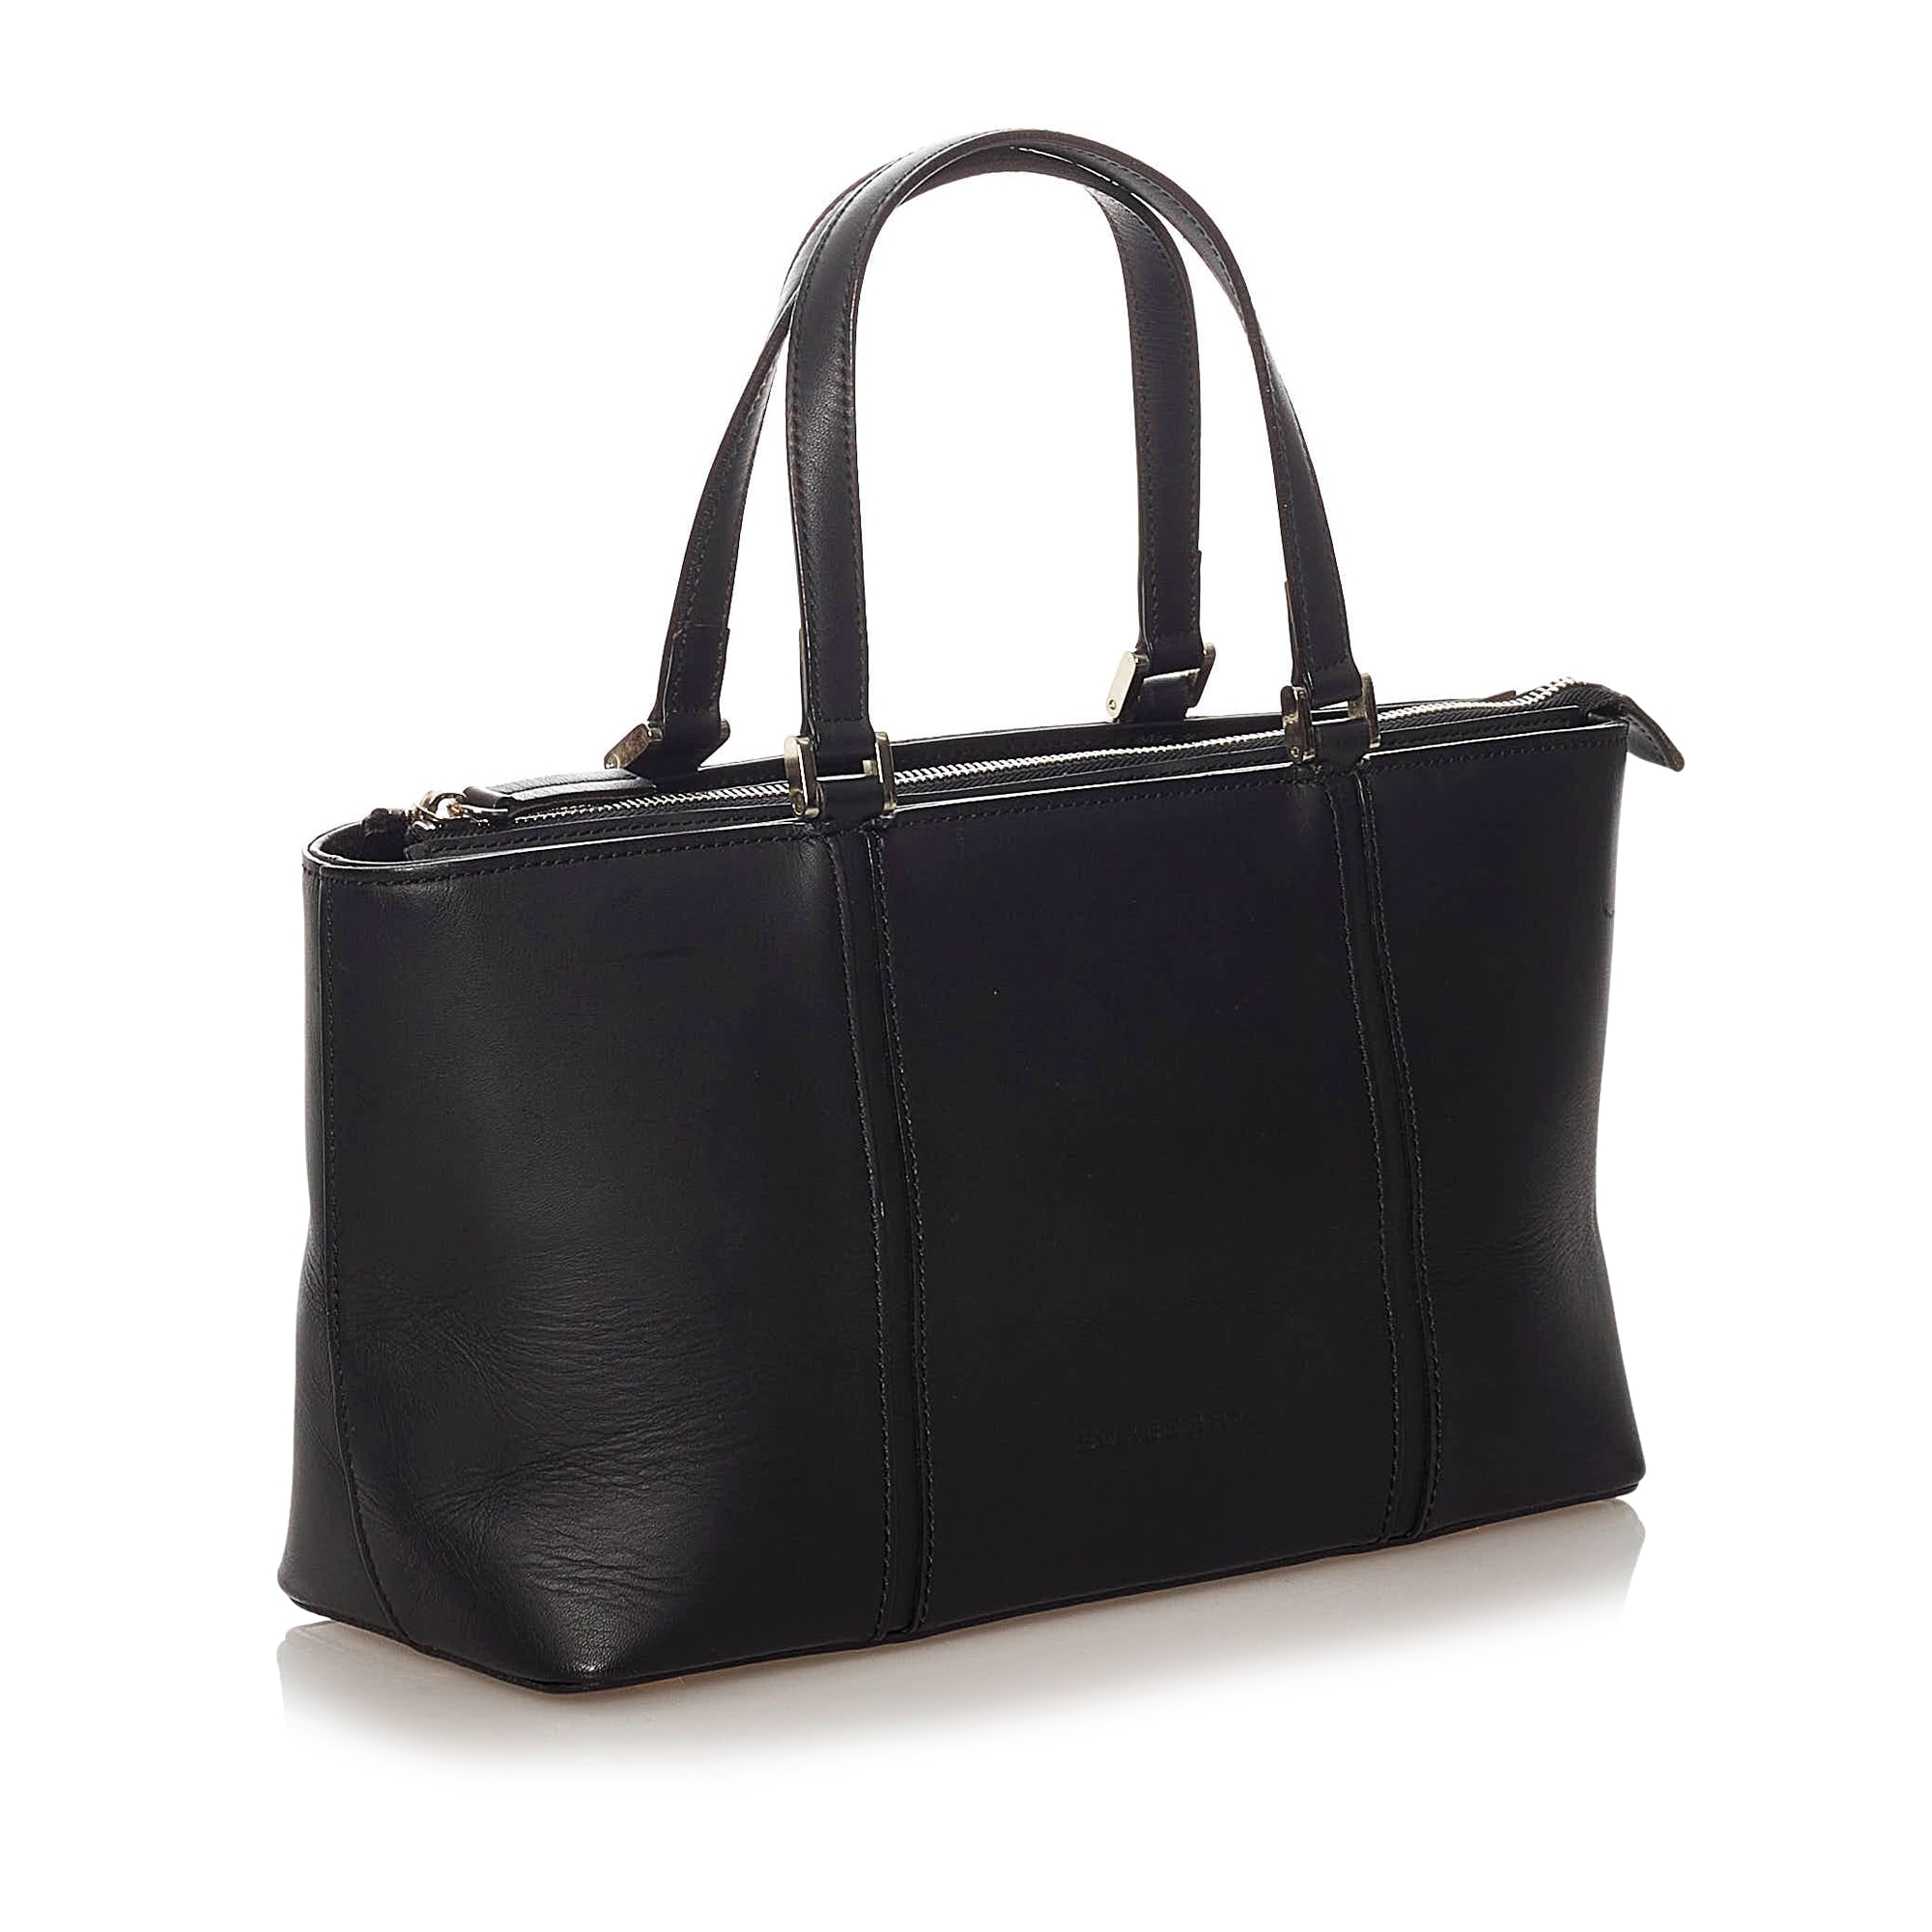 Burberry Leather Handbag, ONESIZE, black